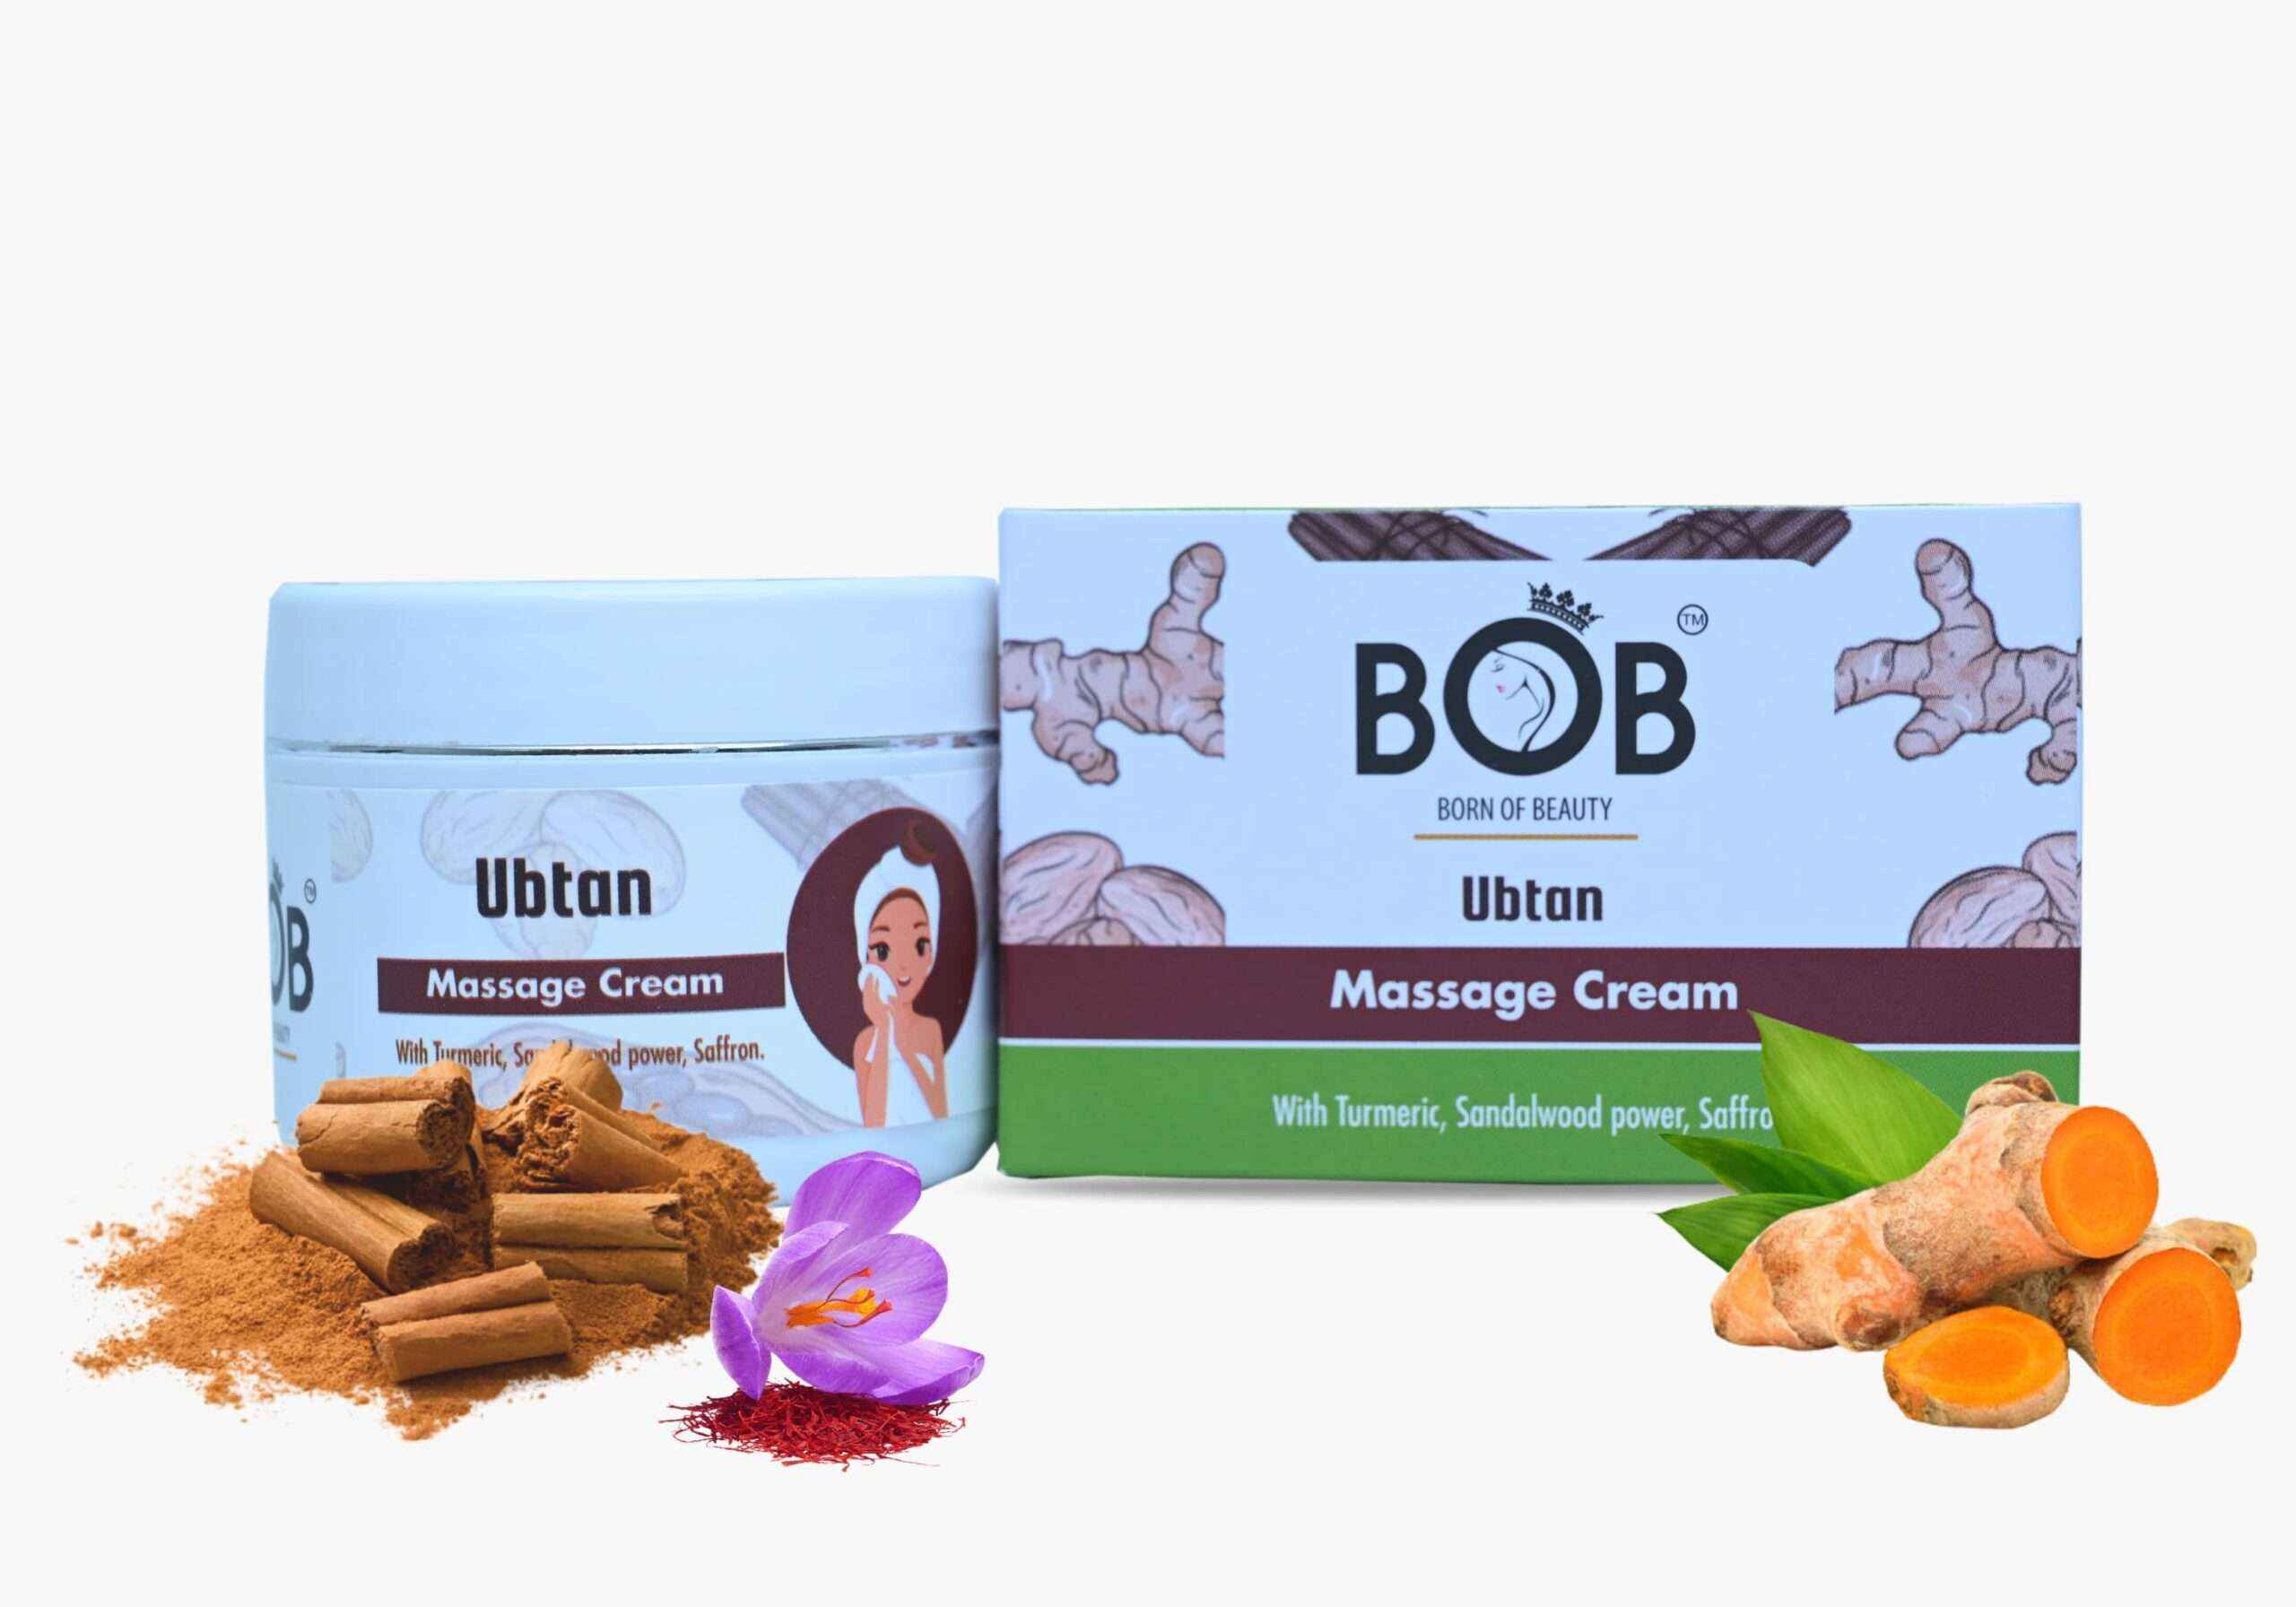 BOB Ubtan massage cream